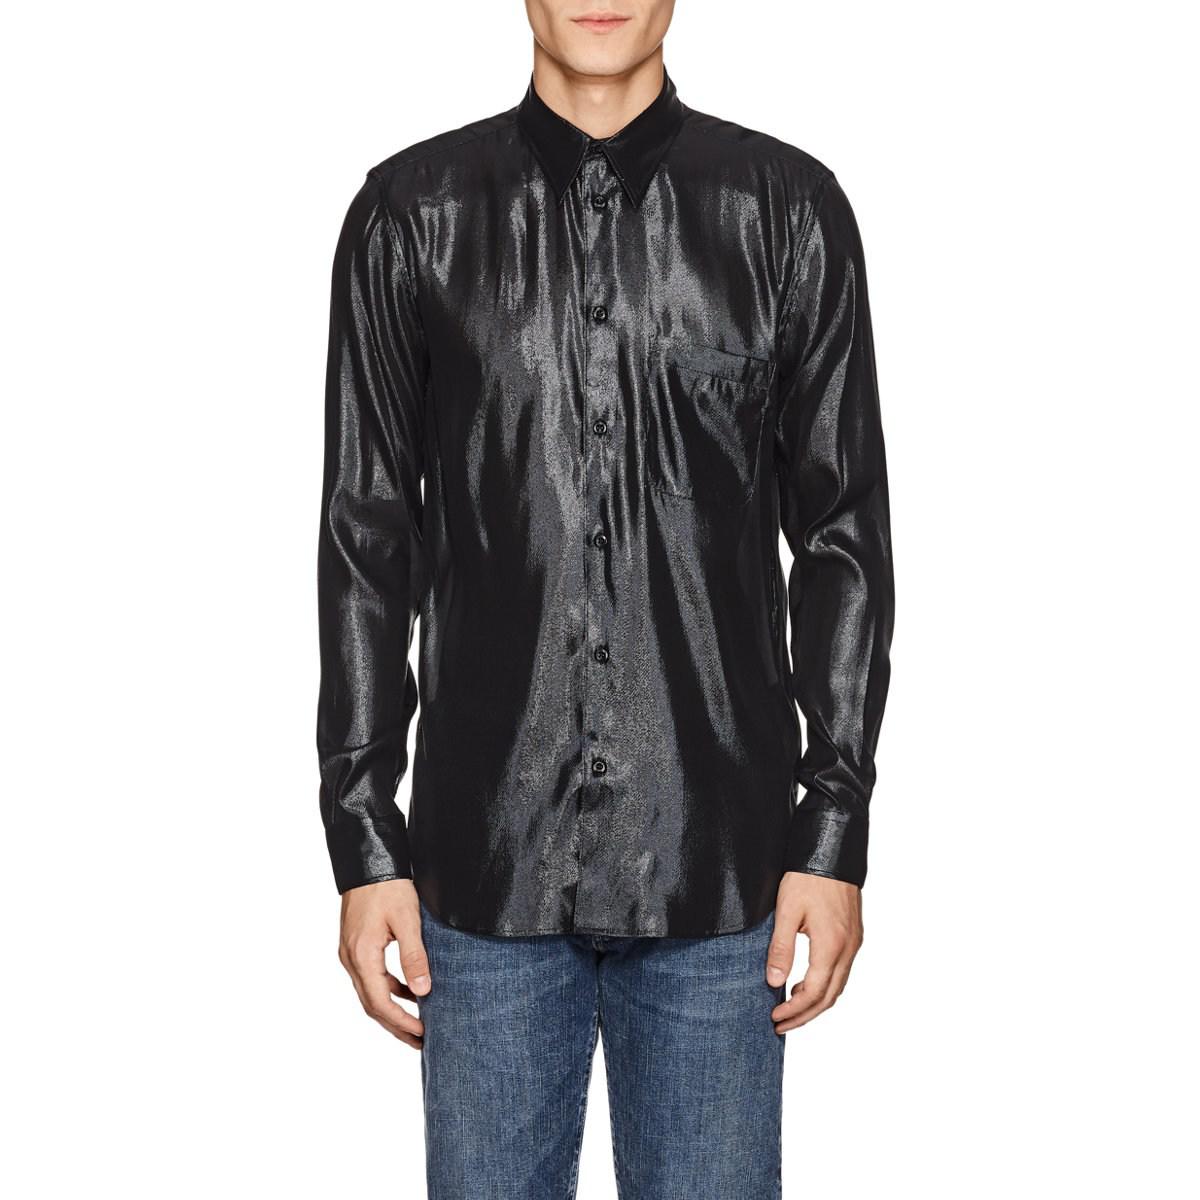 Givenchy Silk-blend Lamé Shirt in Black for Men - Lyst